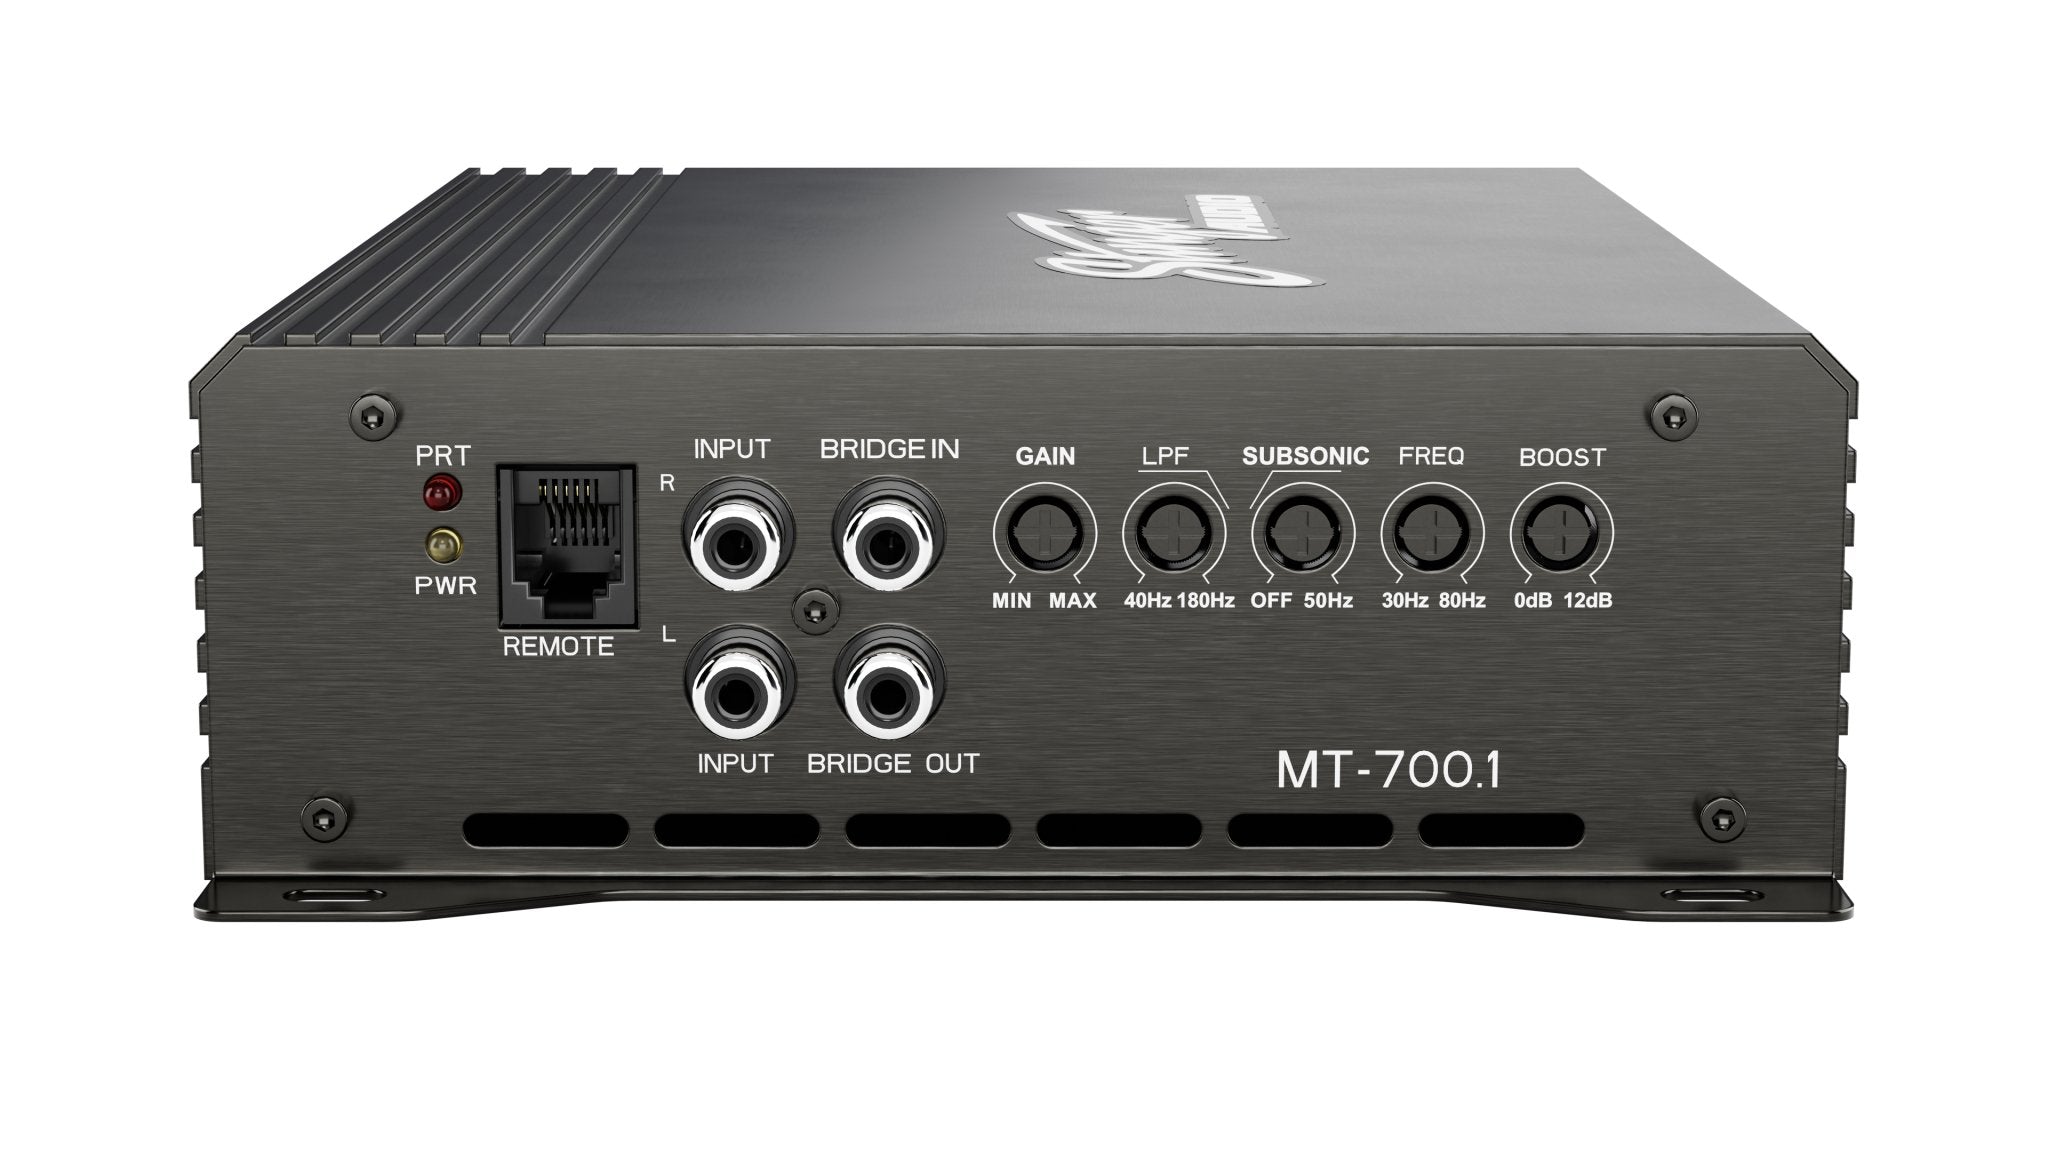 Stinger Audio MT-700.1 700 Watt (RMS) Class D Monoblock Car Audio Amplifier